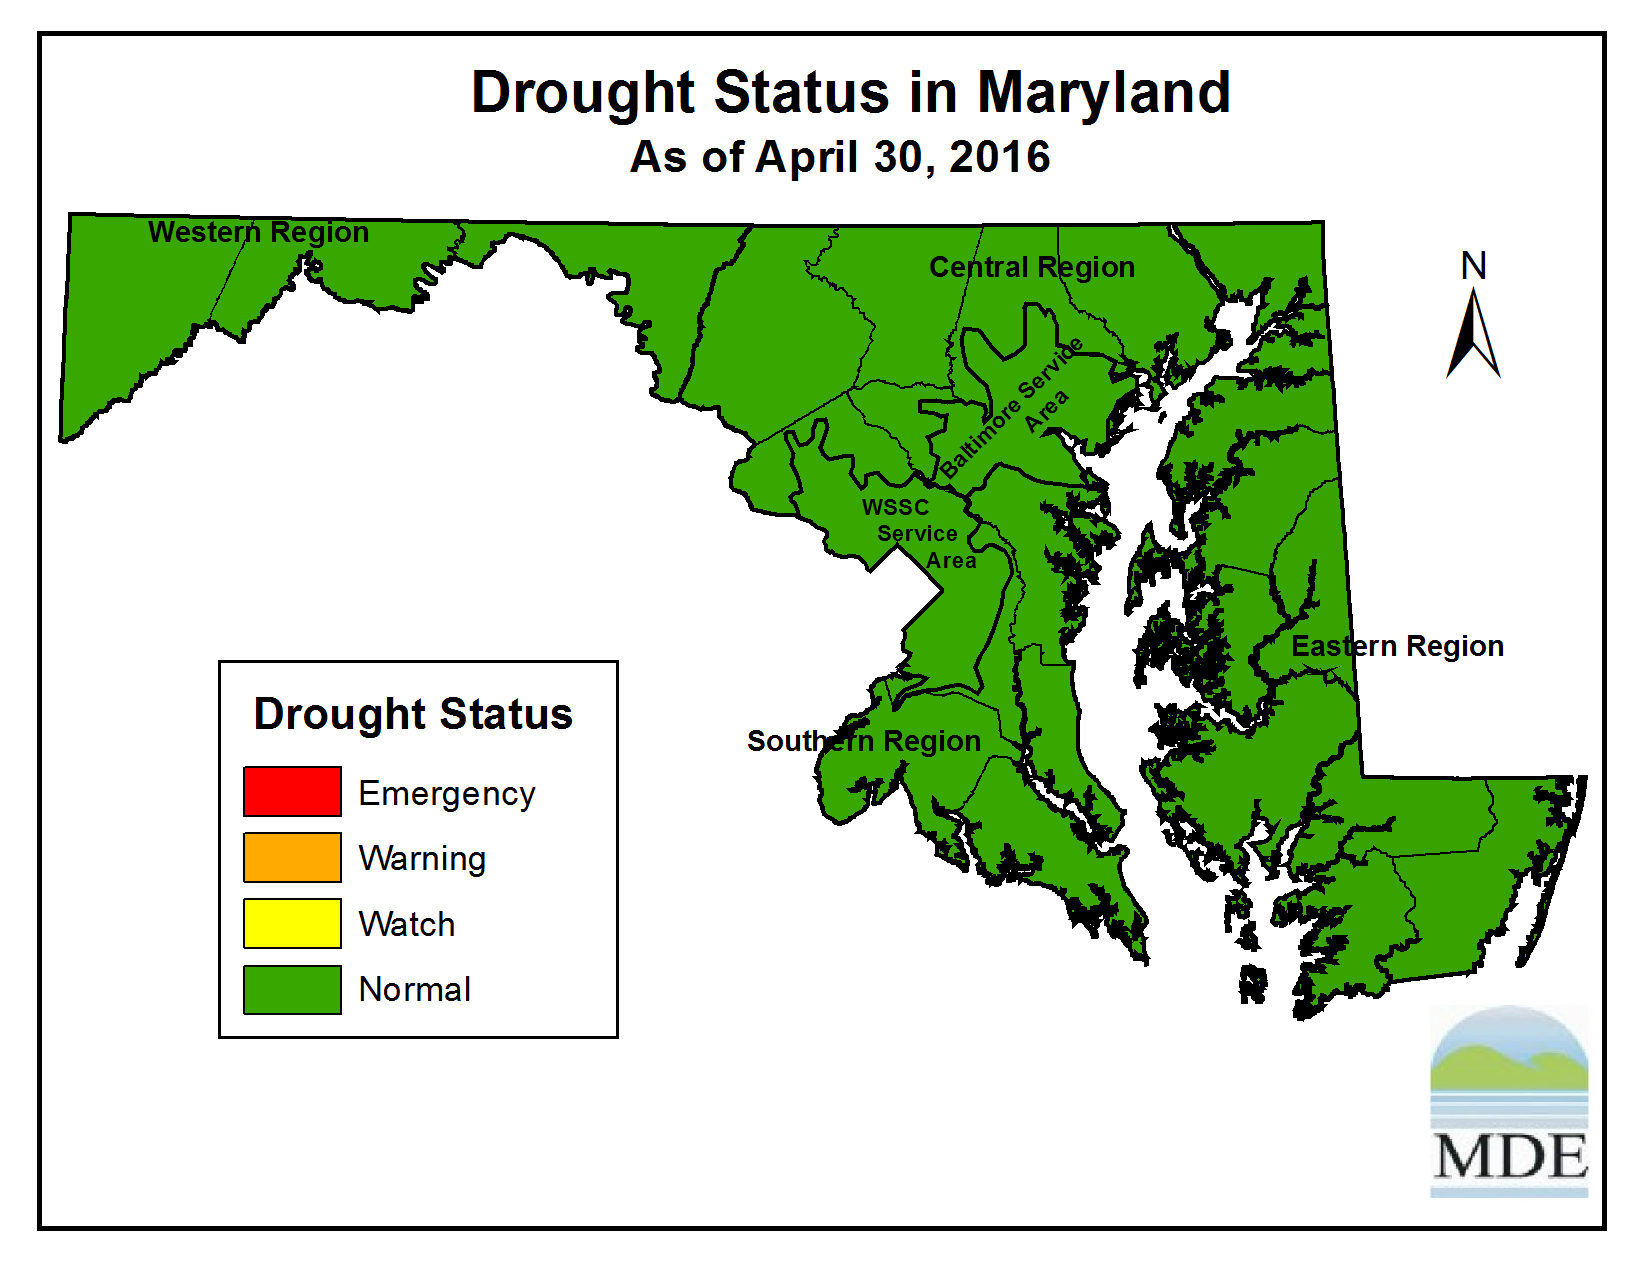 Drought Status as of April 30, 2016